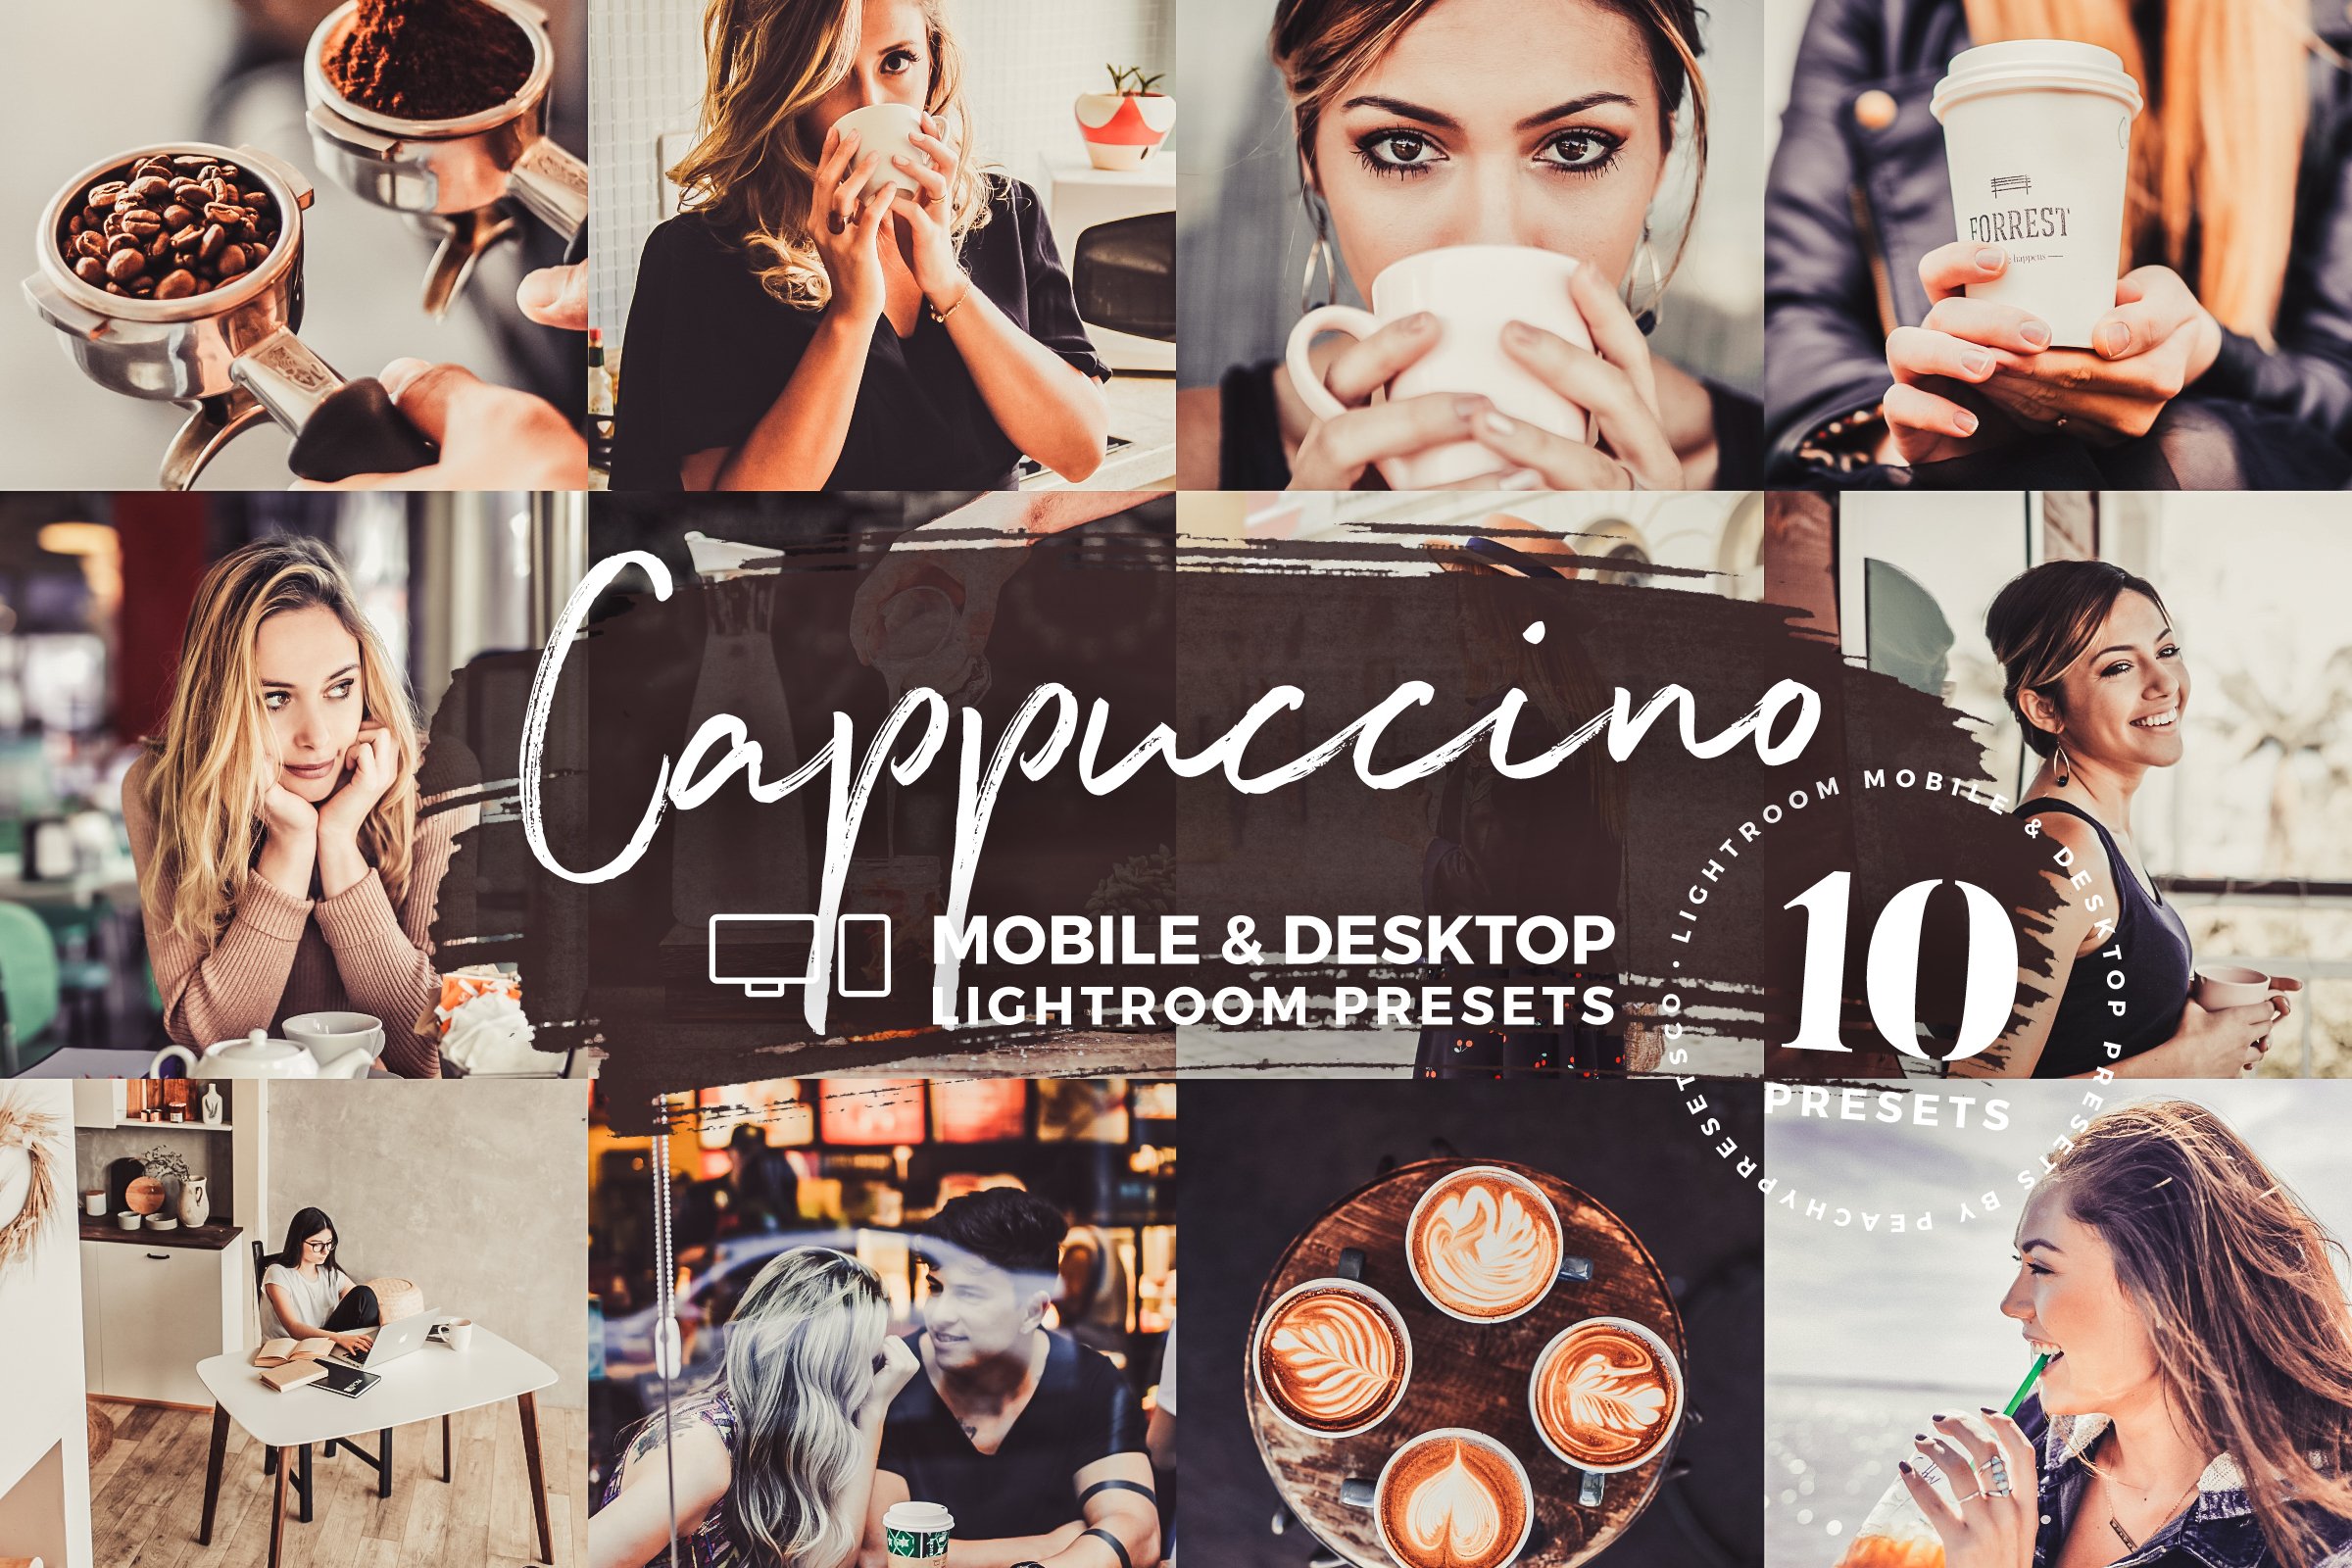 10 Cappuccino Mobile Presetscover image.